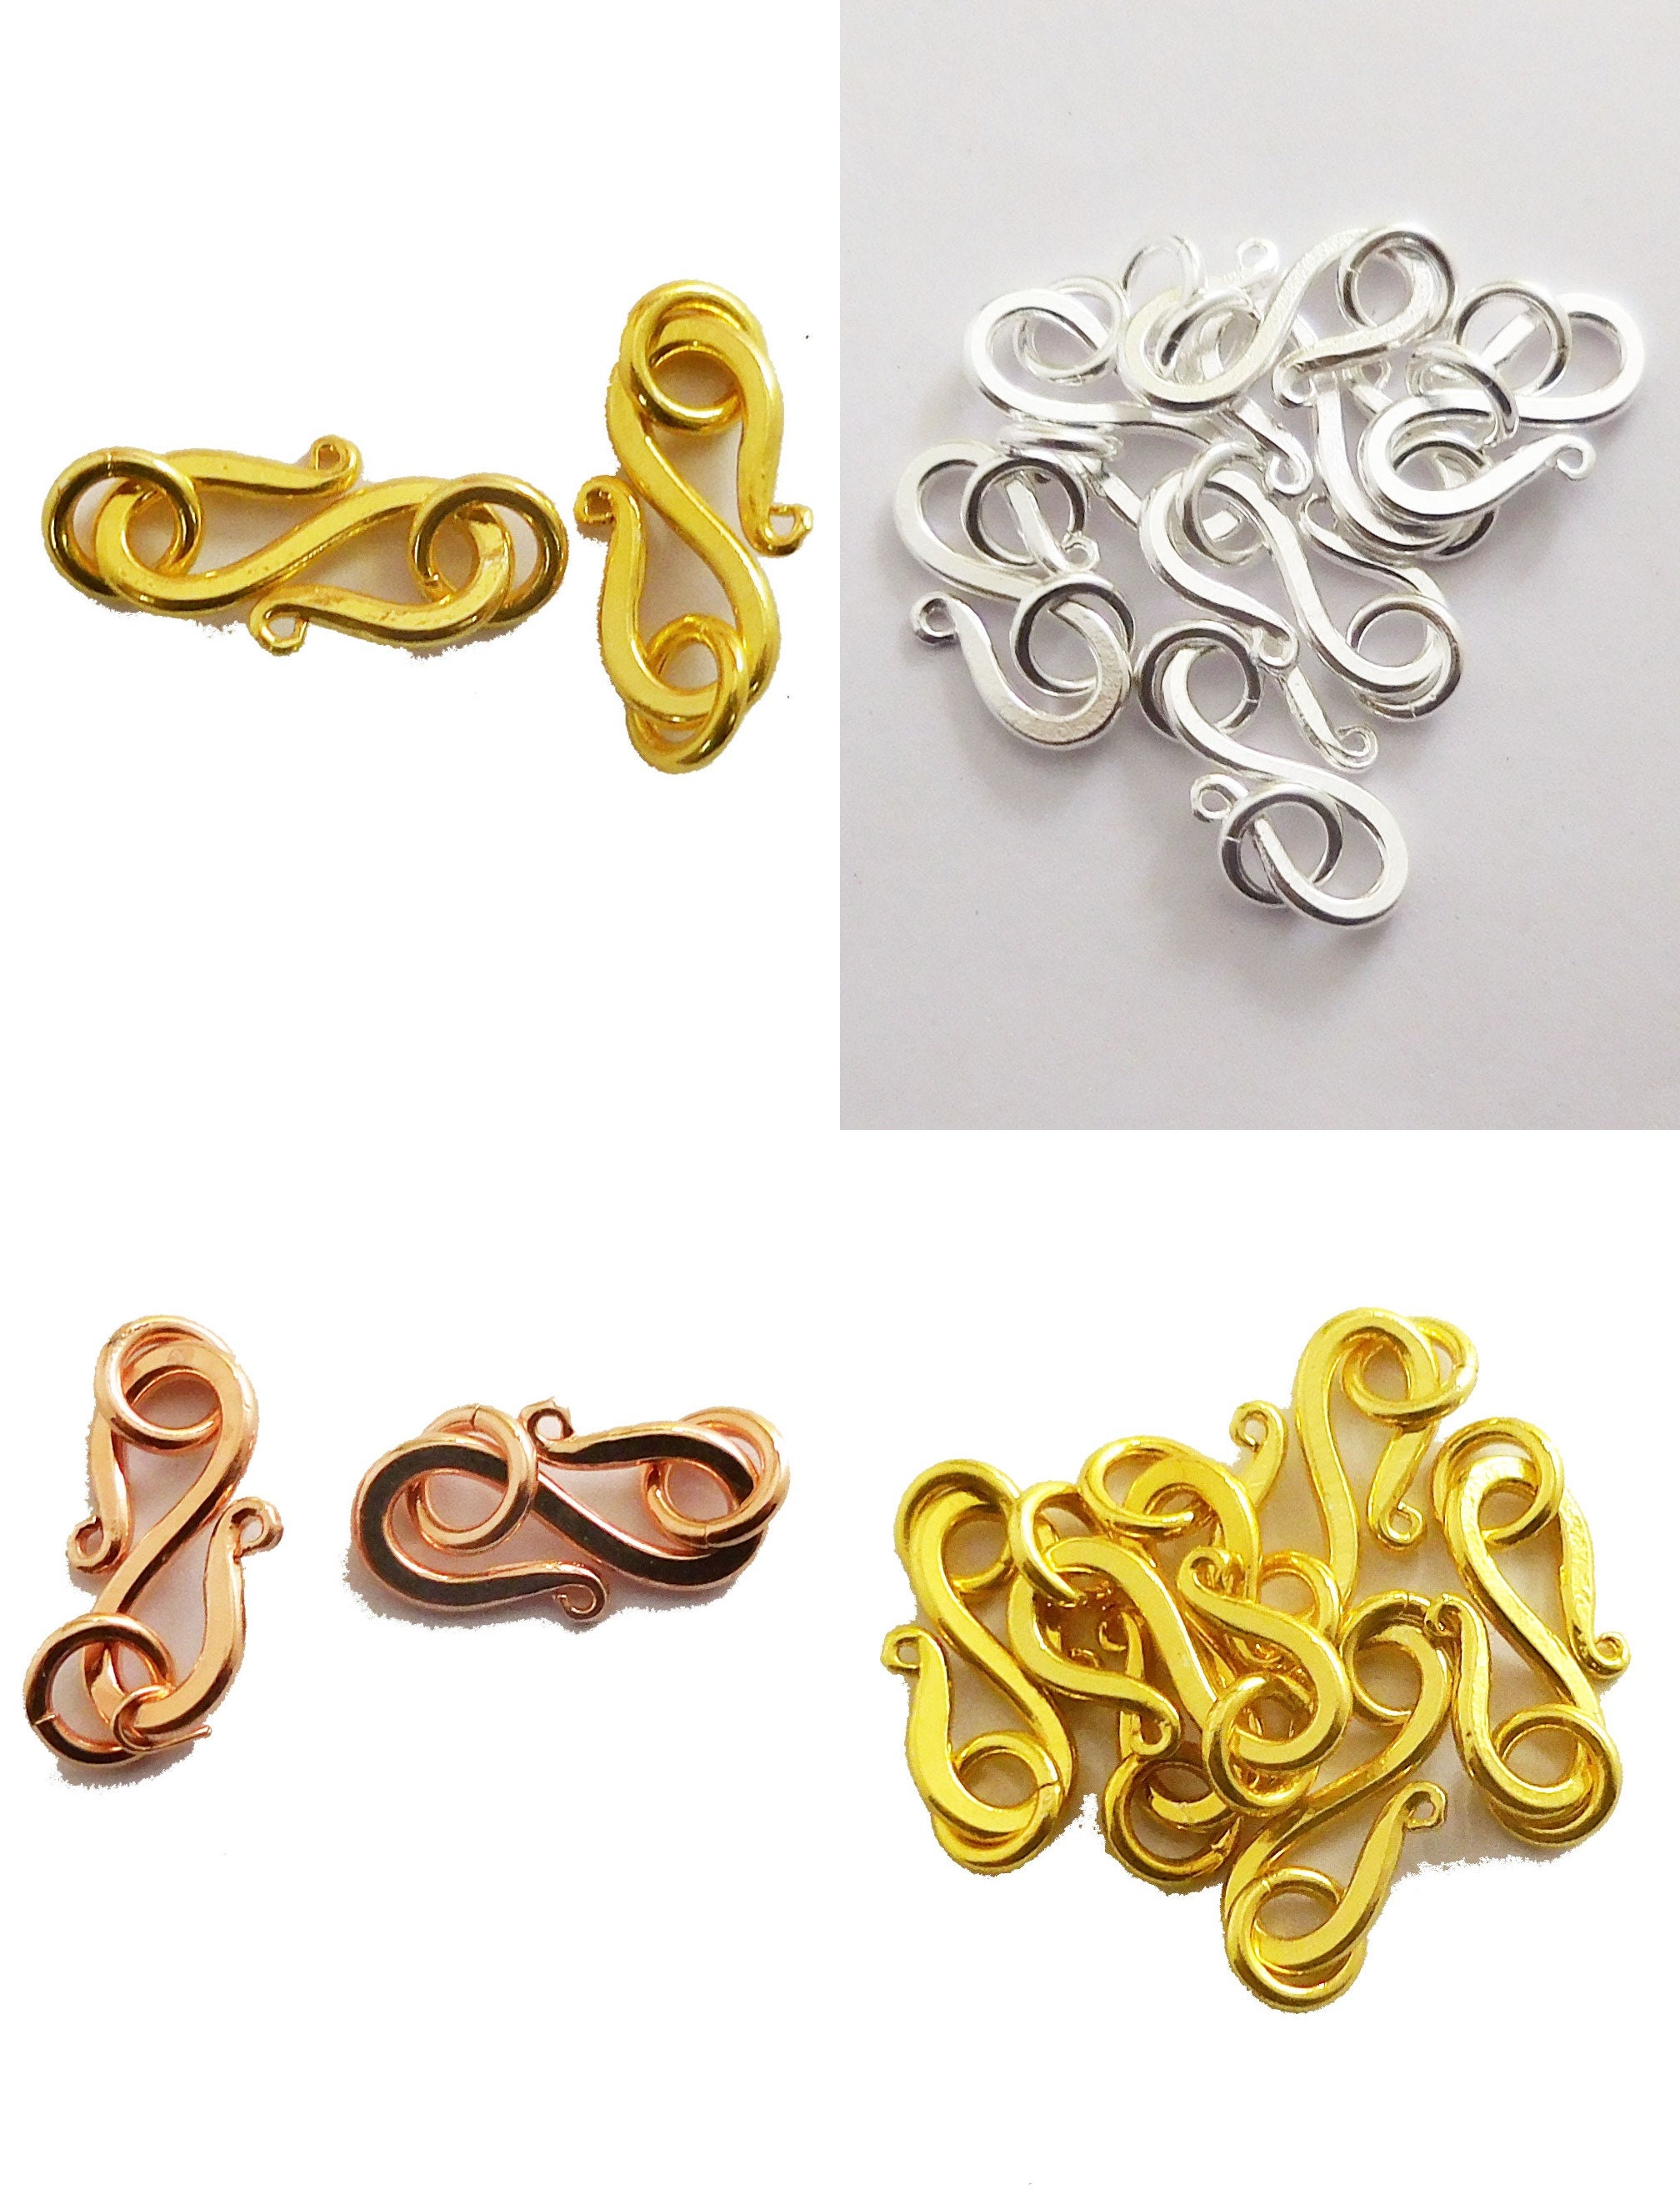 3pcs Jewelry Making Clasps S Hook Bracelet Clasps Bracelet Connector Clasps, Adult Unisex, Size: 0.69 x 0.39 x 0.04, Silver